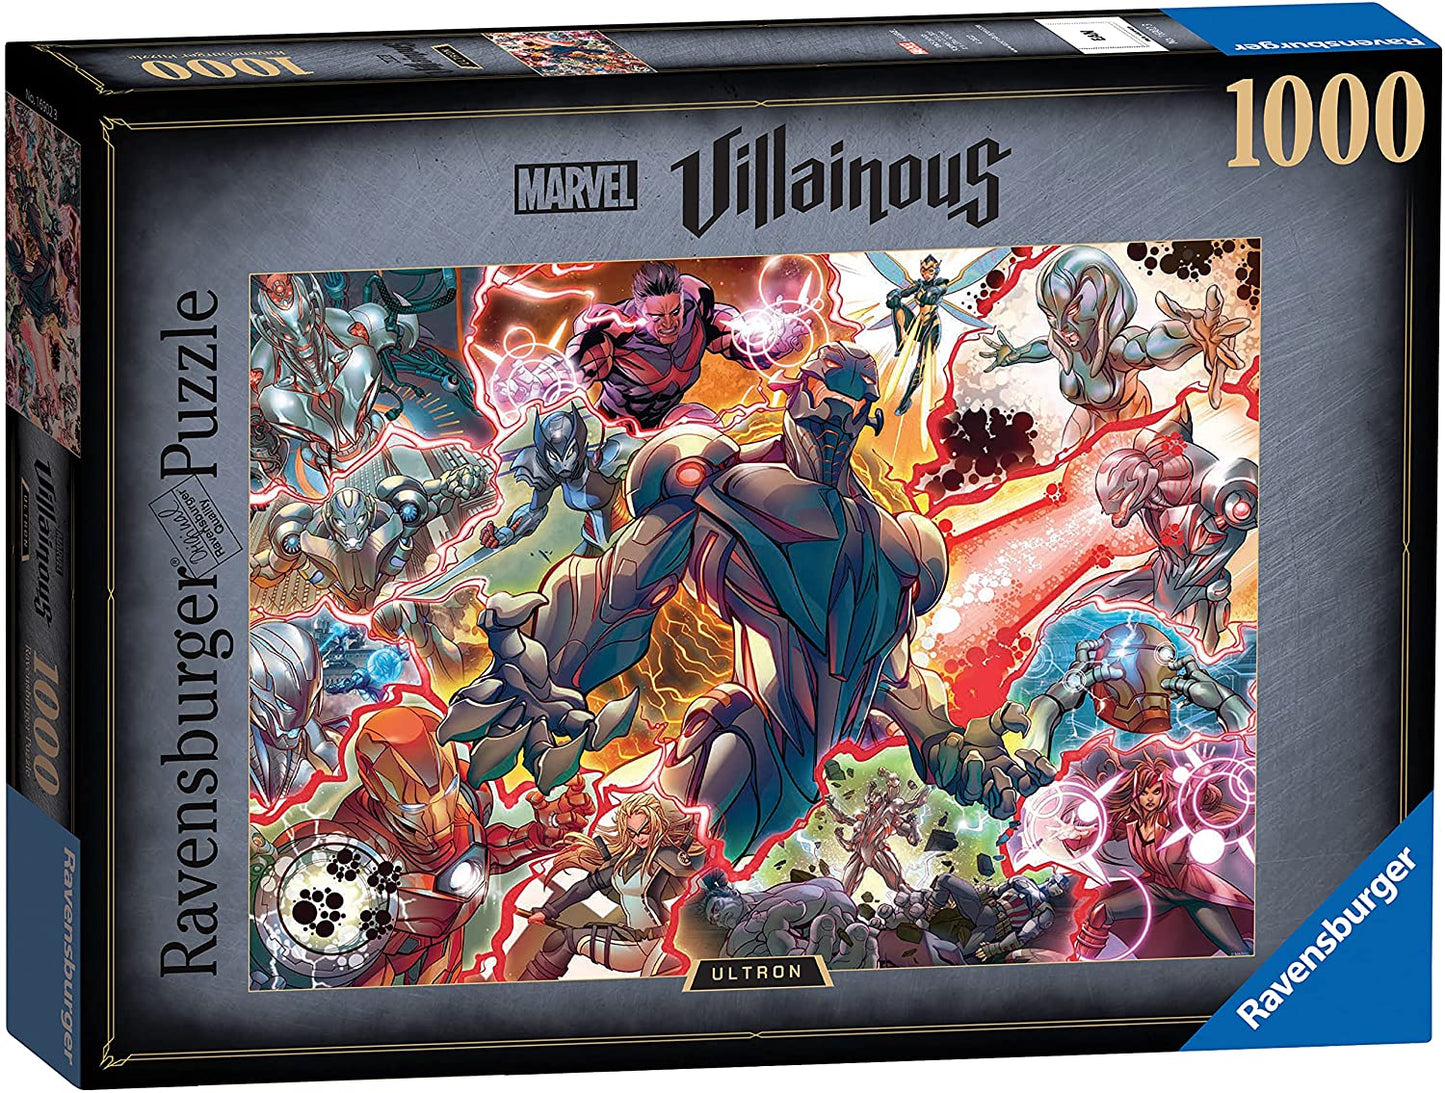 Ravensburger - Marvel Villainous - Ultron - 1000 Piece Jigsaw Puzzle